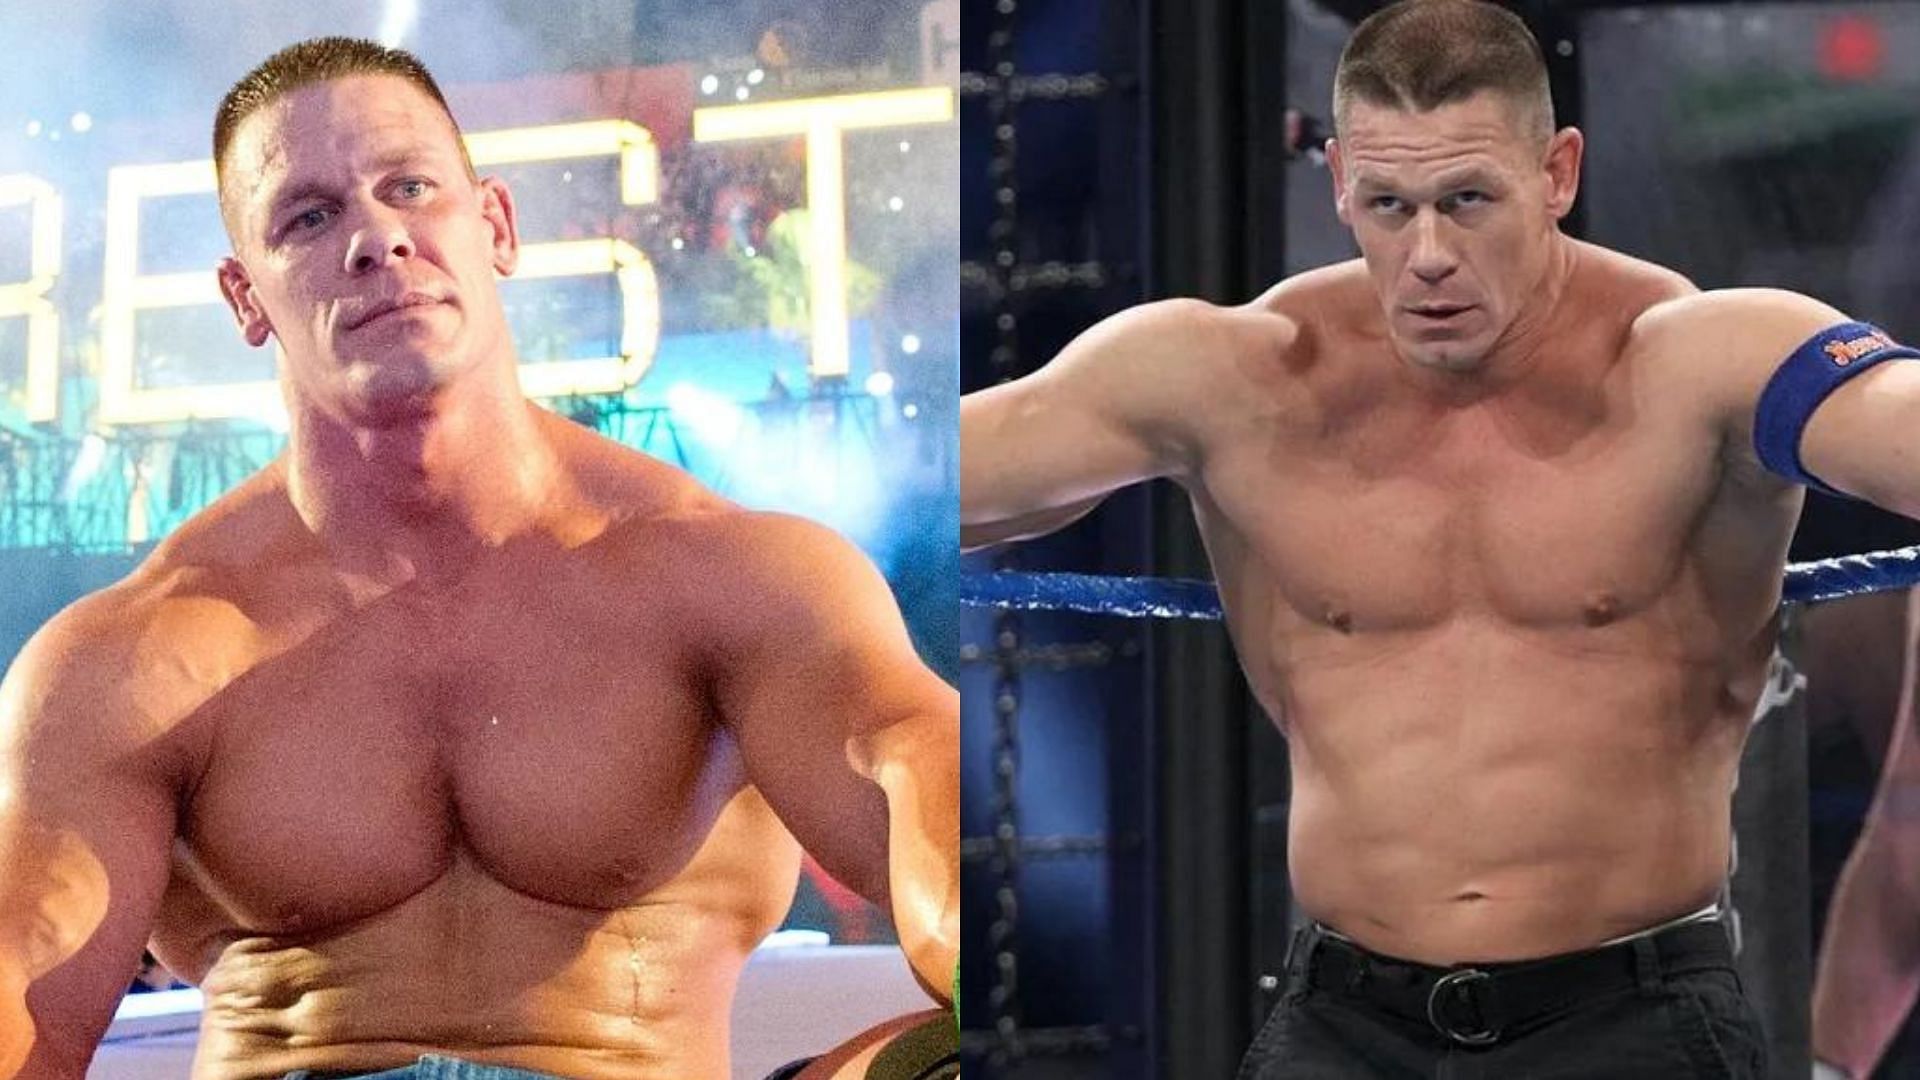 John Cena will be returning to WWE on SmackDown